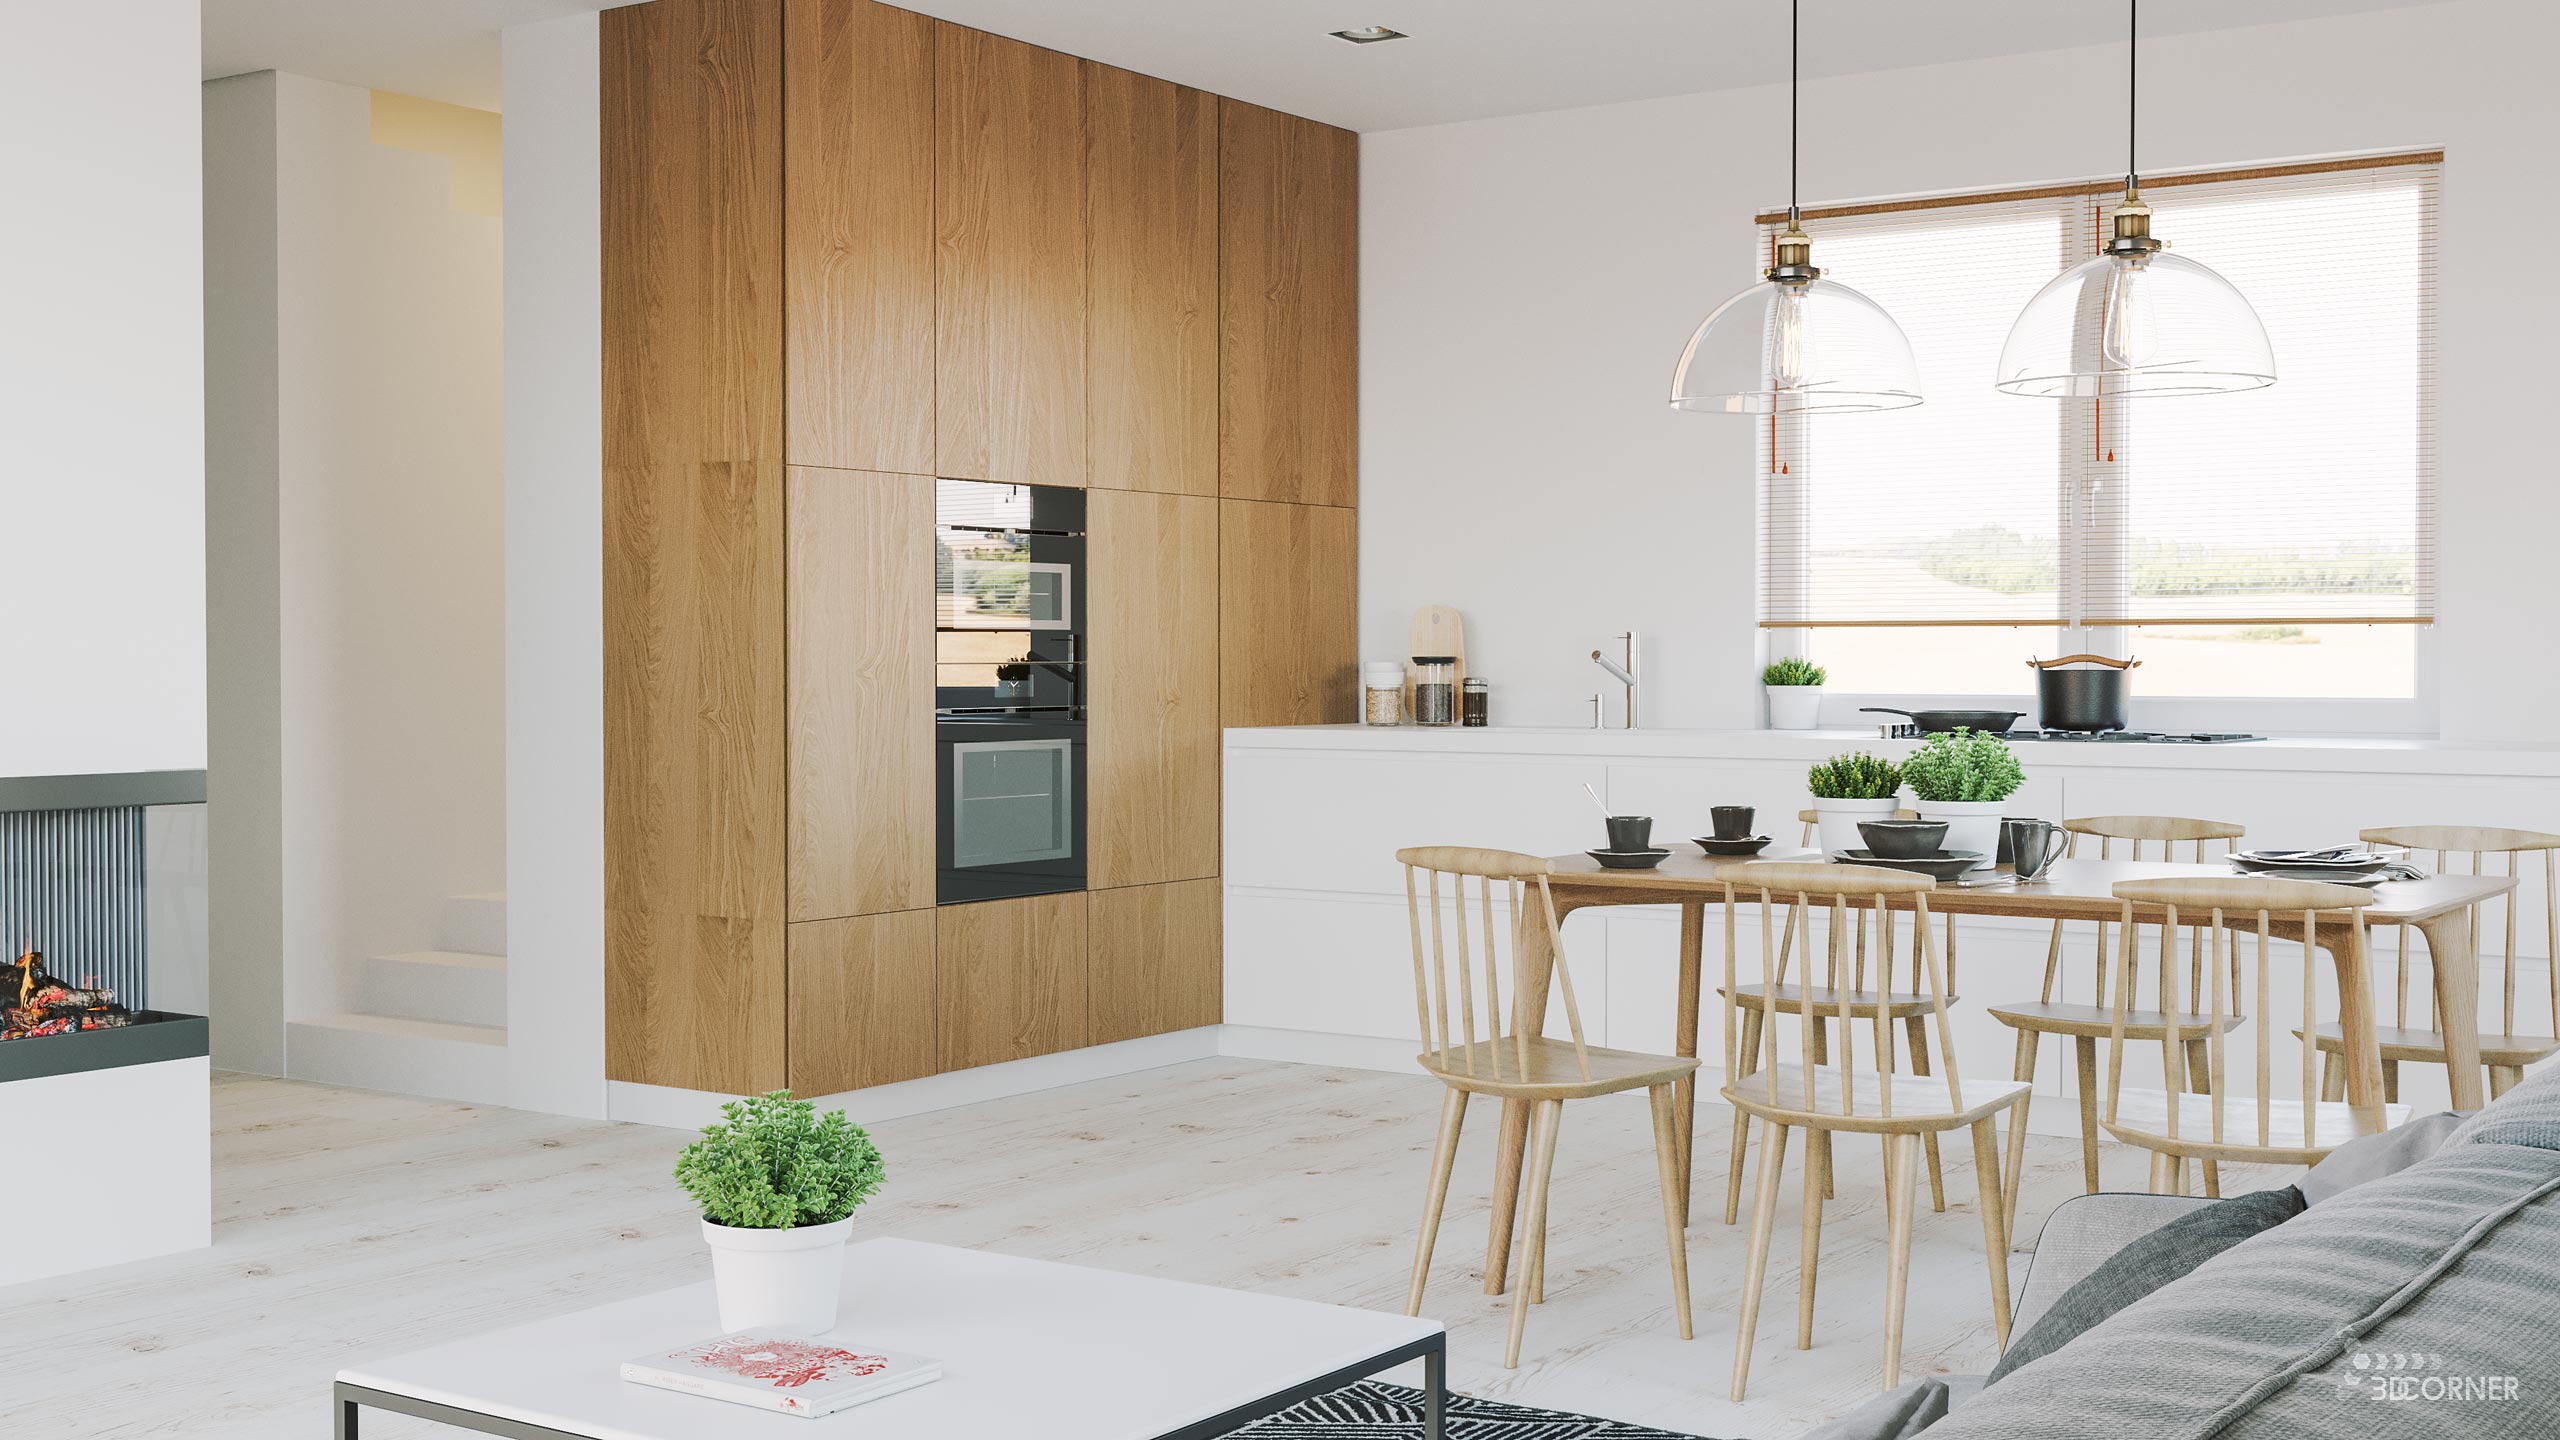 visualization interior photorealistic modern architecture apartment kitchen 3dcorner